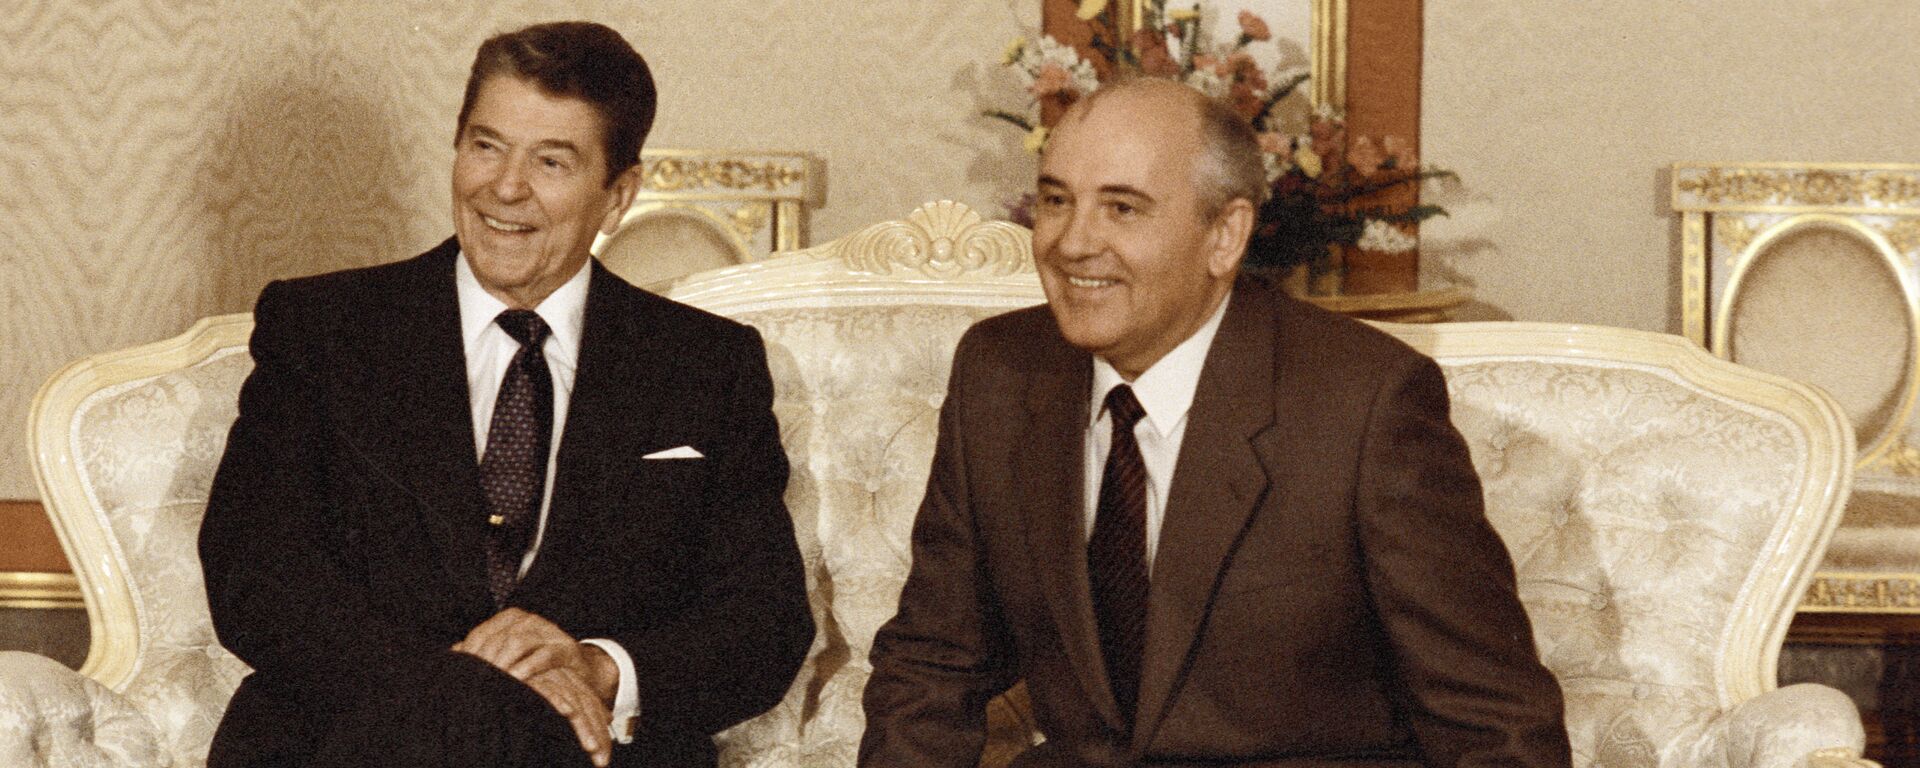 Reagan and Gorbachev - Sputnik International, 1920, 31.01.2020